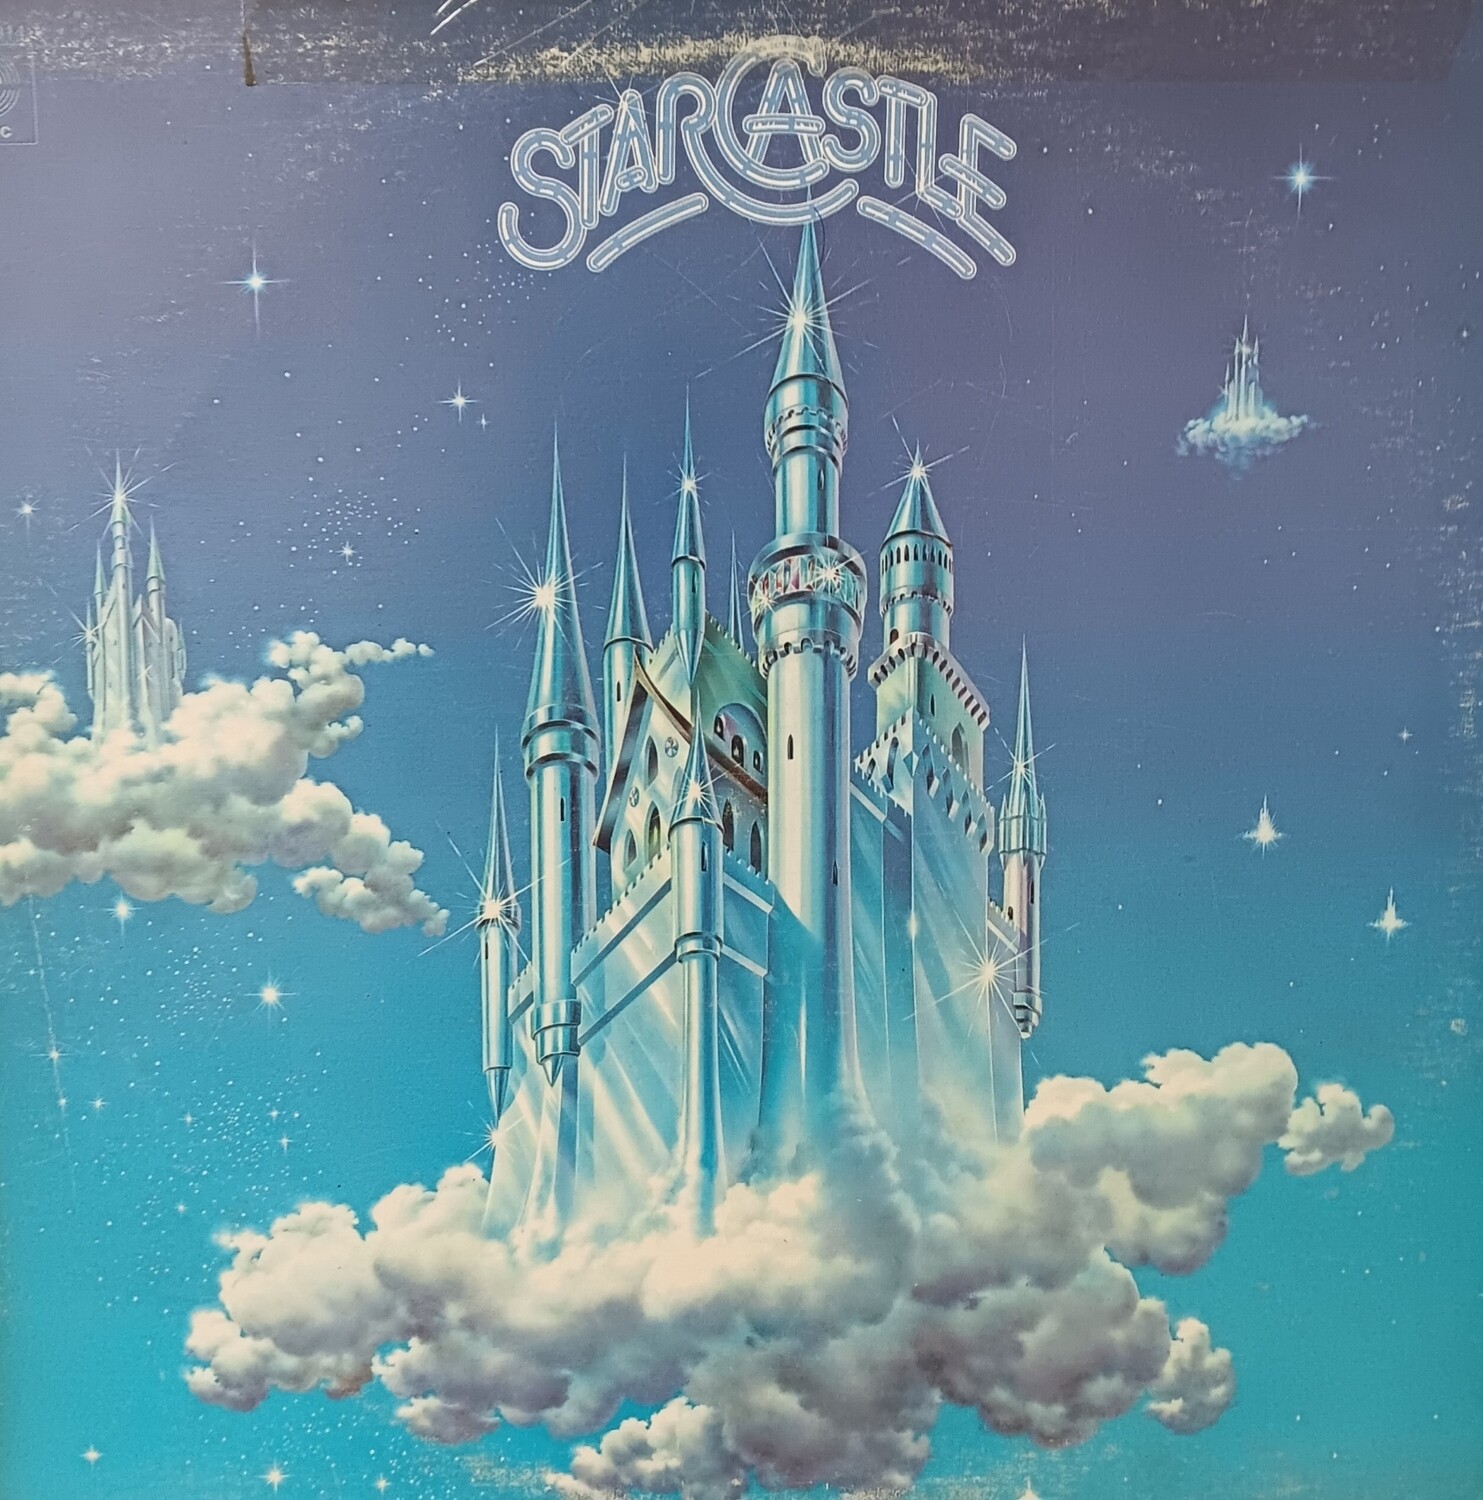 STARCASTLE - Starcastle